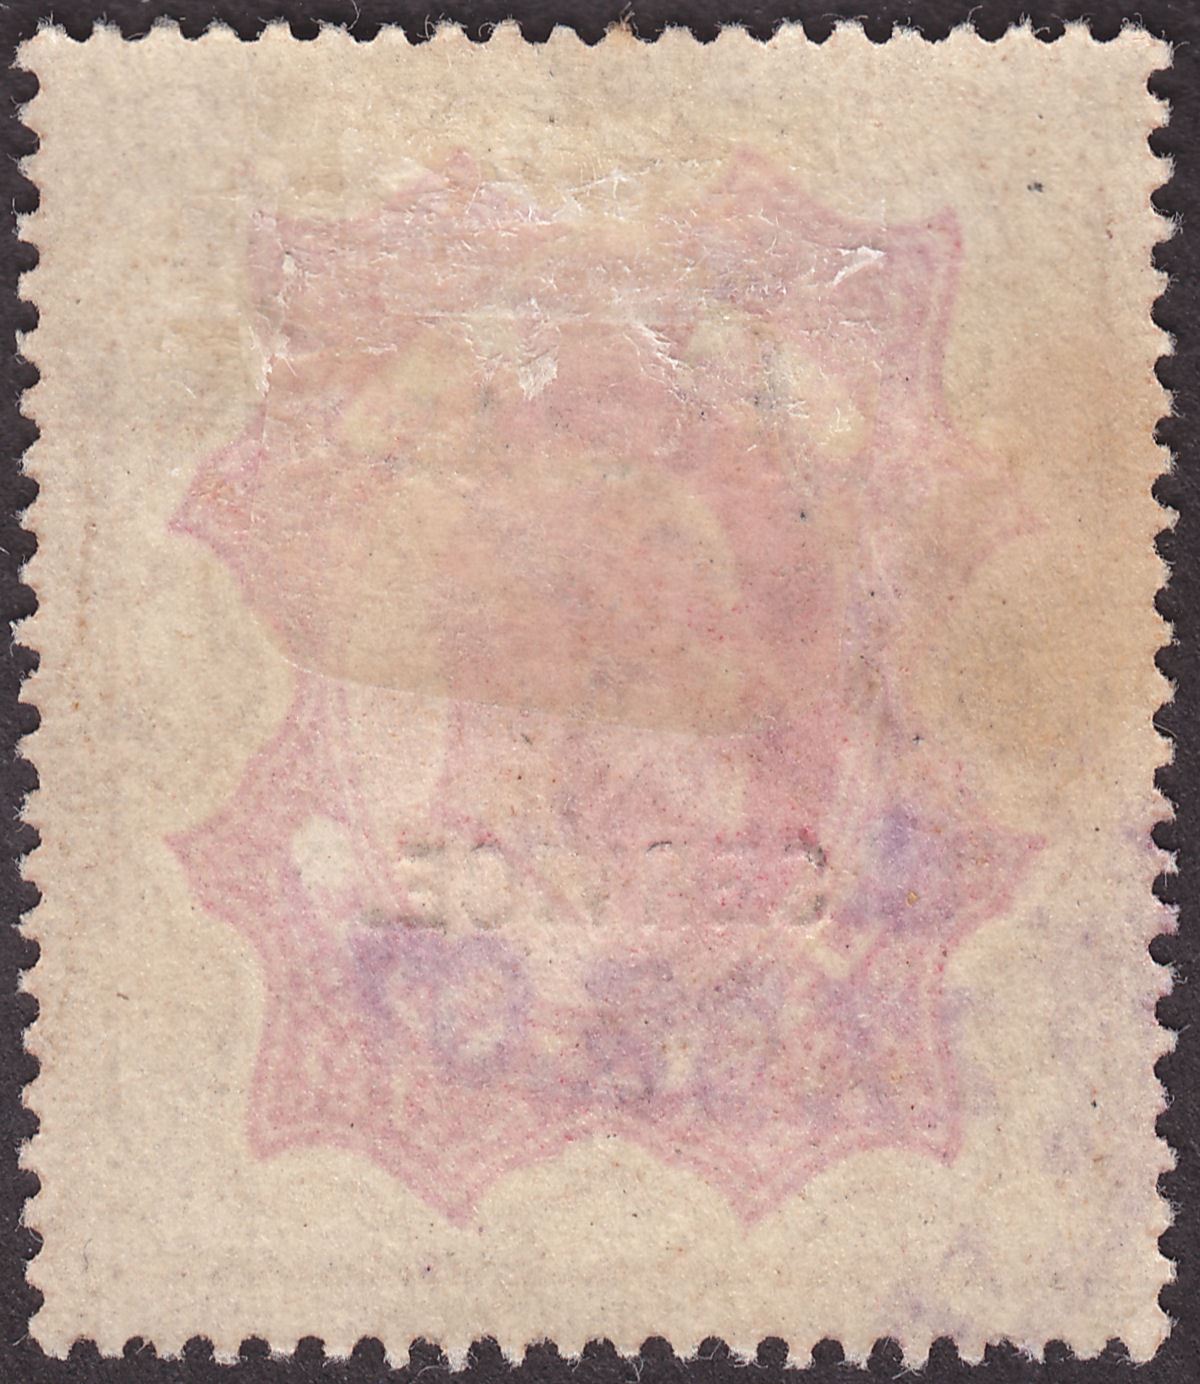 India 1904 KEVII Revenue Postal Service Overprint 2r Rose-Red + Yl-Brn Used BF19